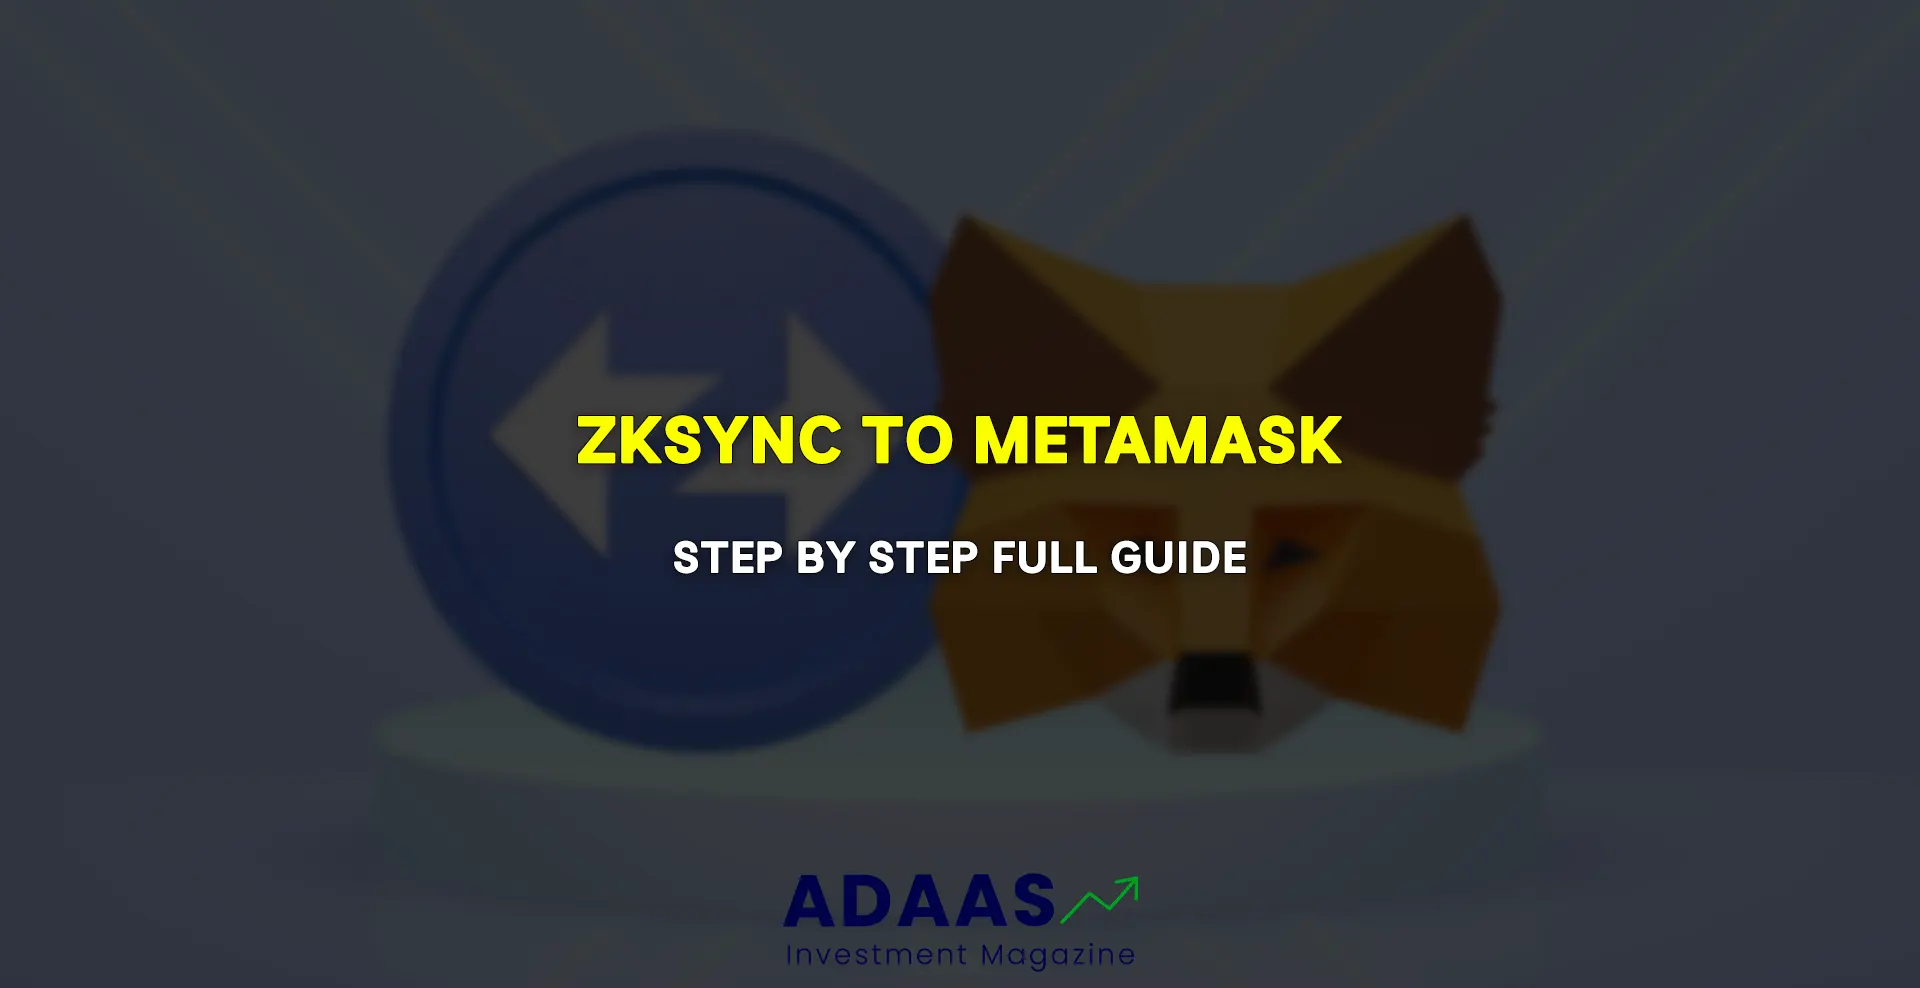 Step 1: Install MetaMask